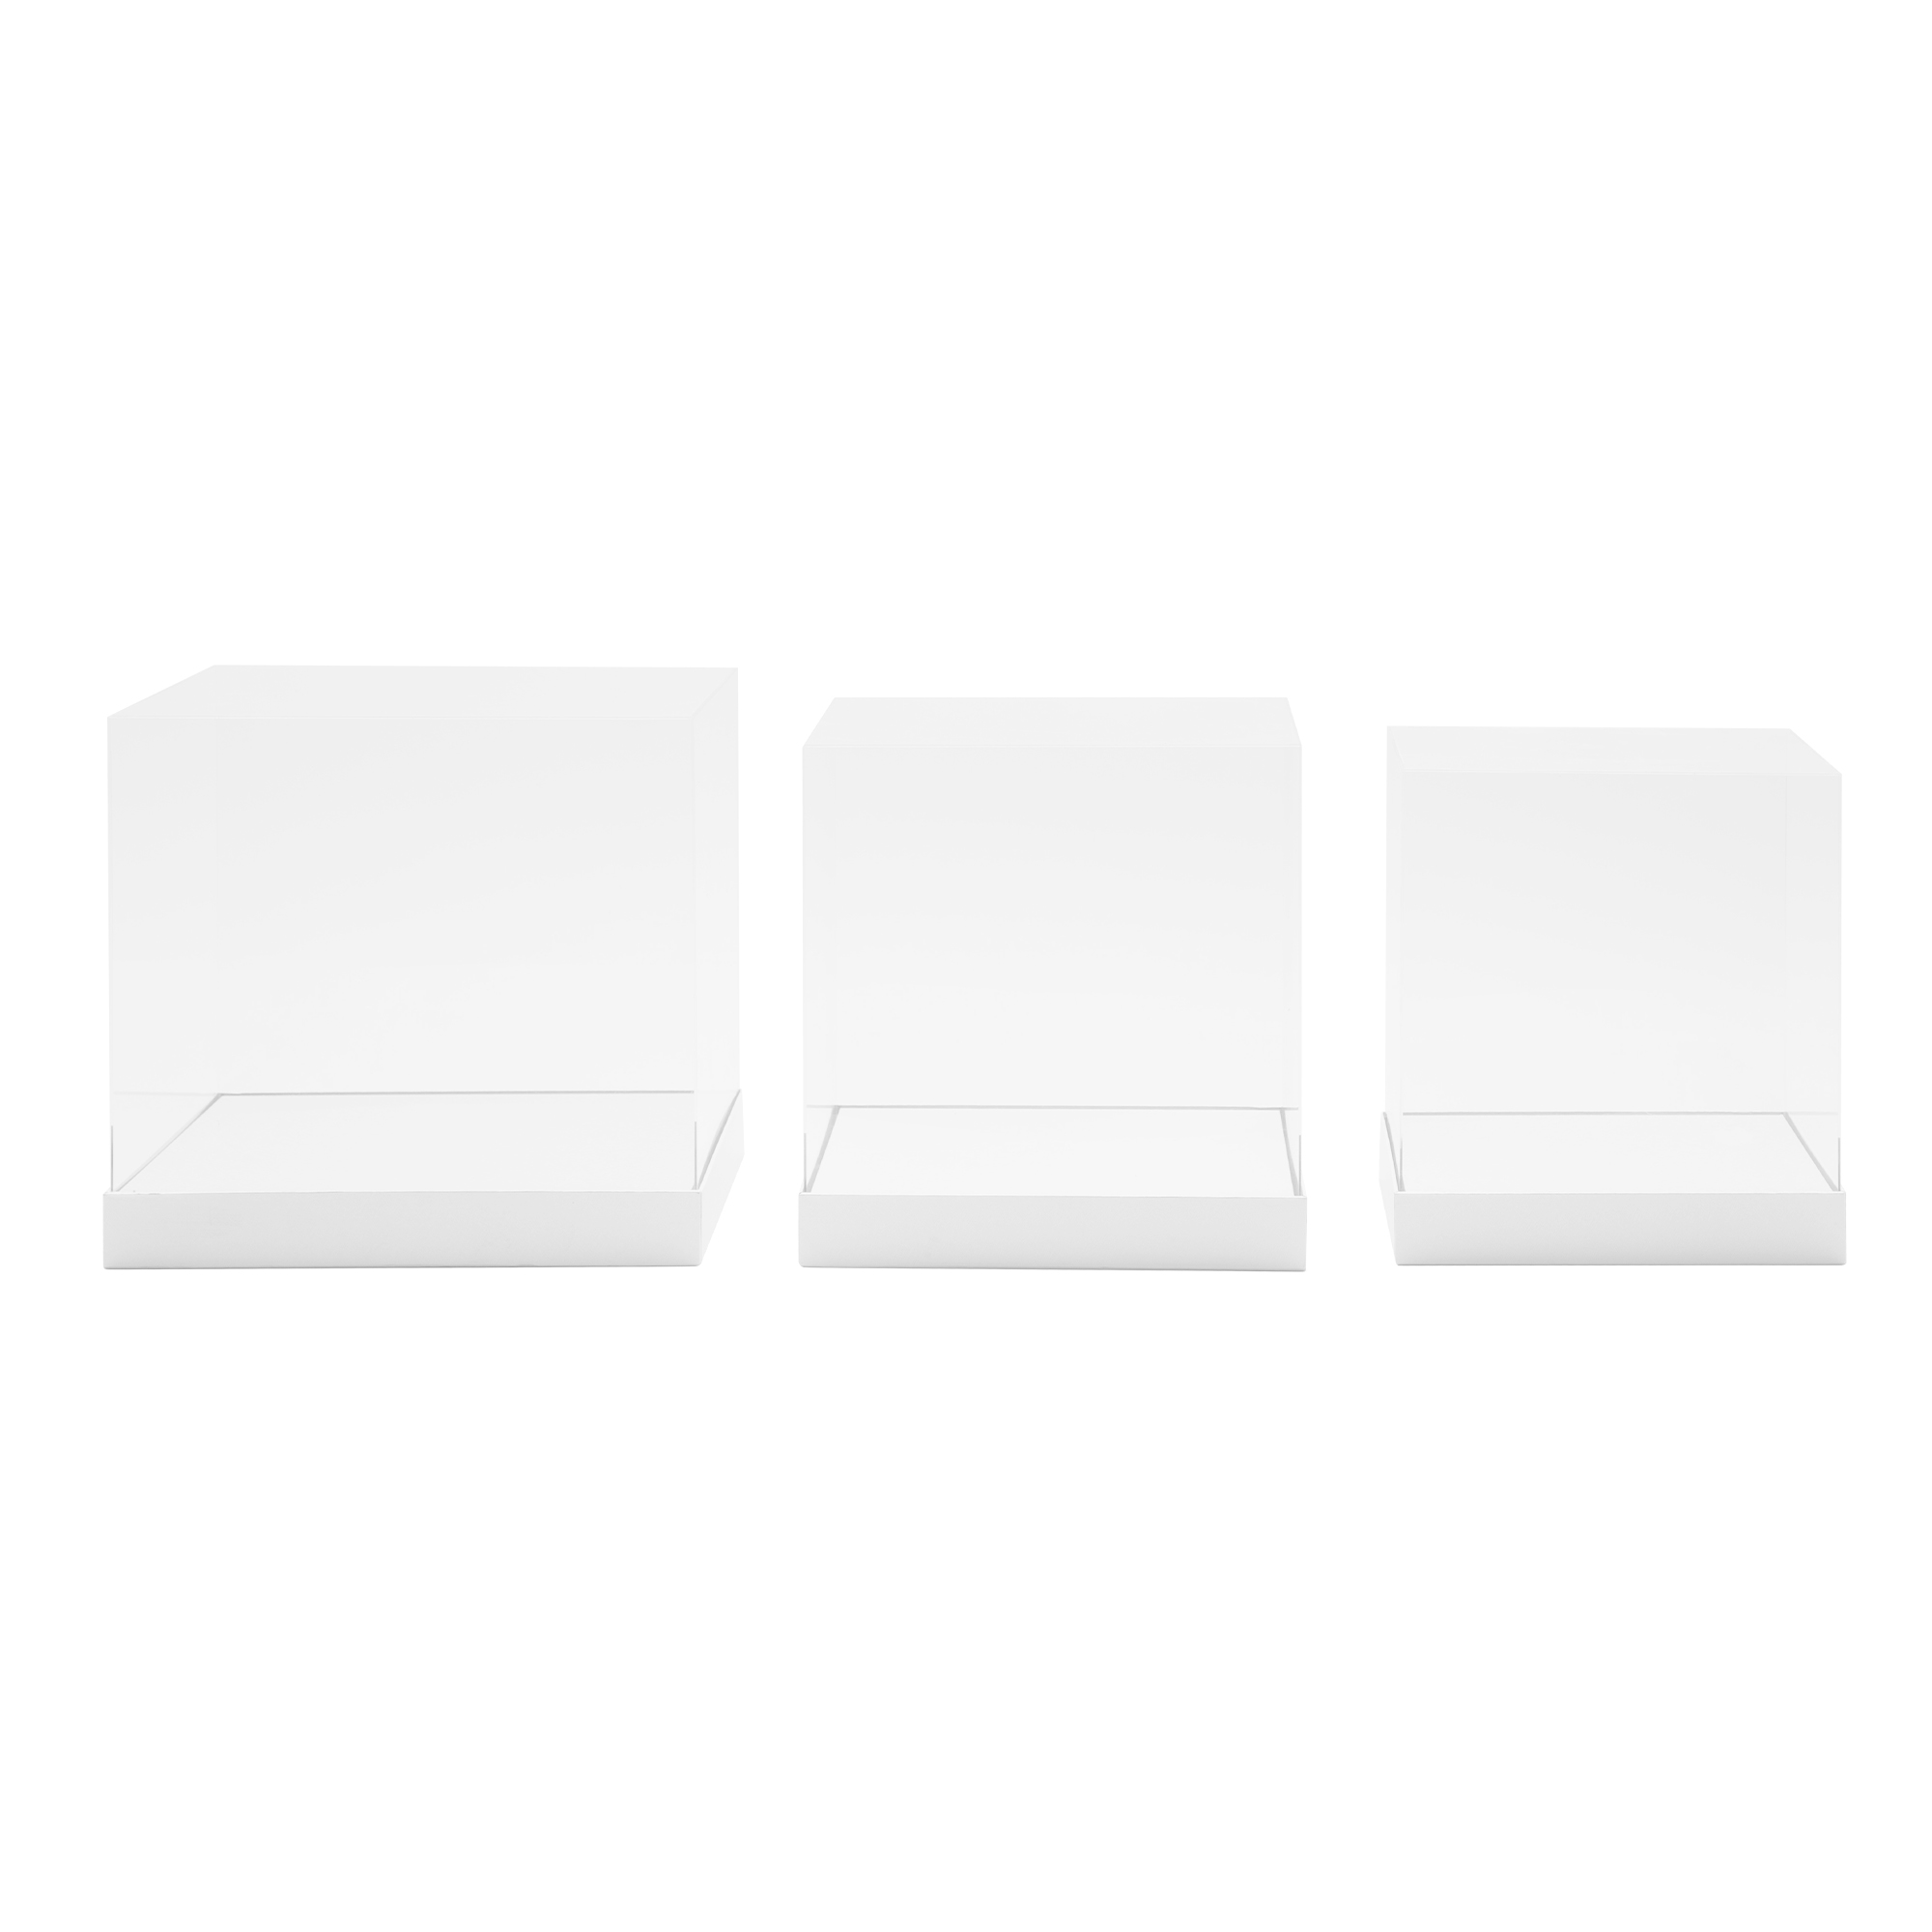 Acrylic Gift Box 3pc/set - White